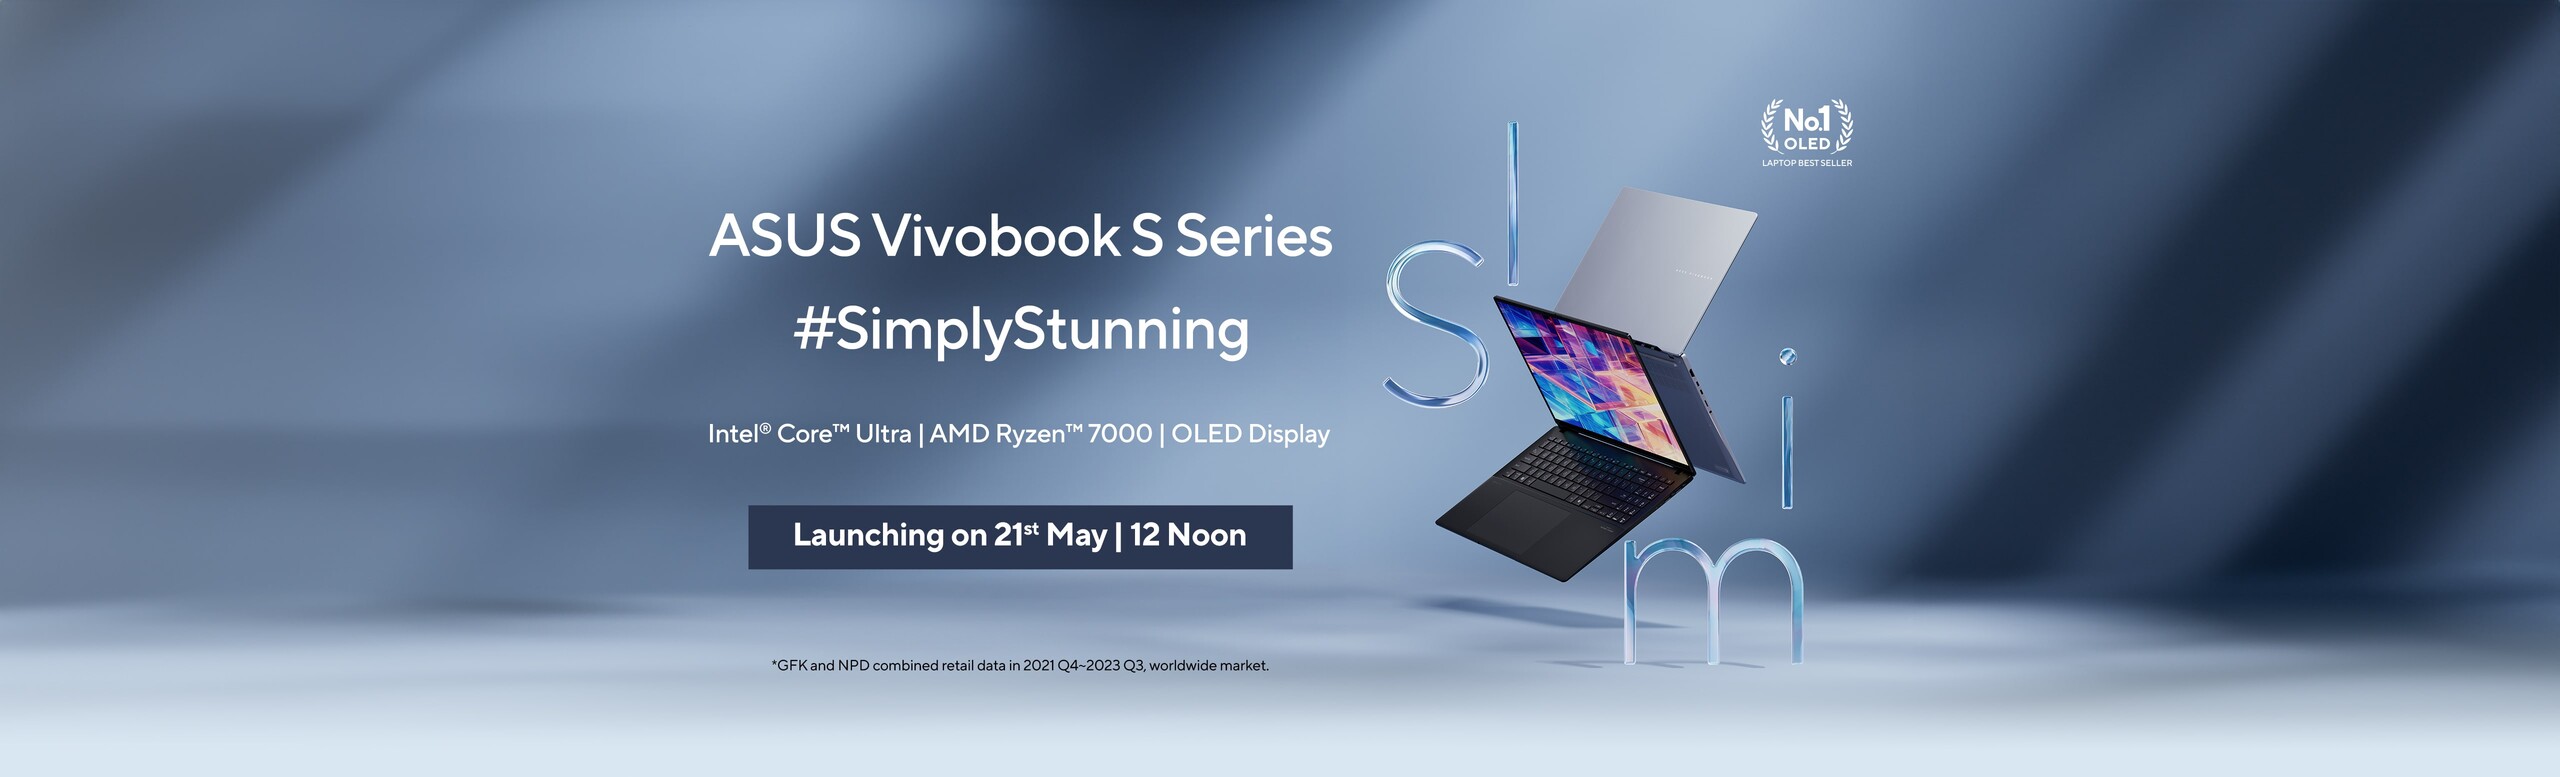 Vivobook S series pre launch banner